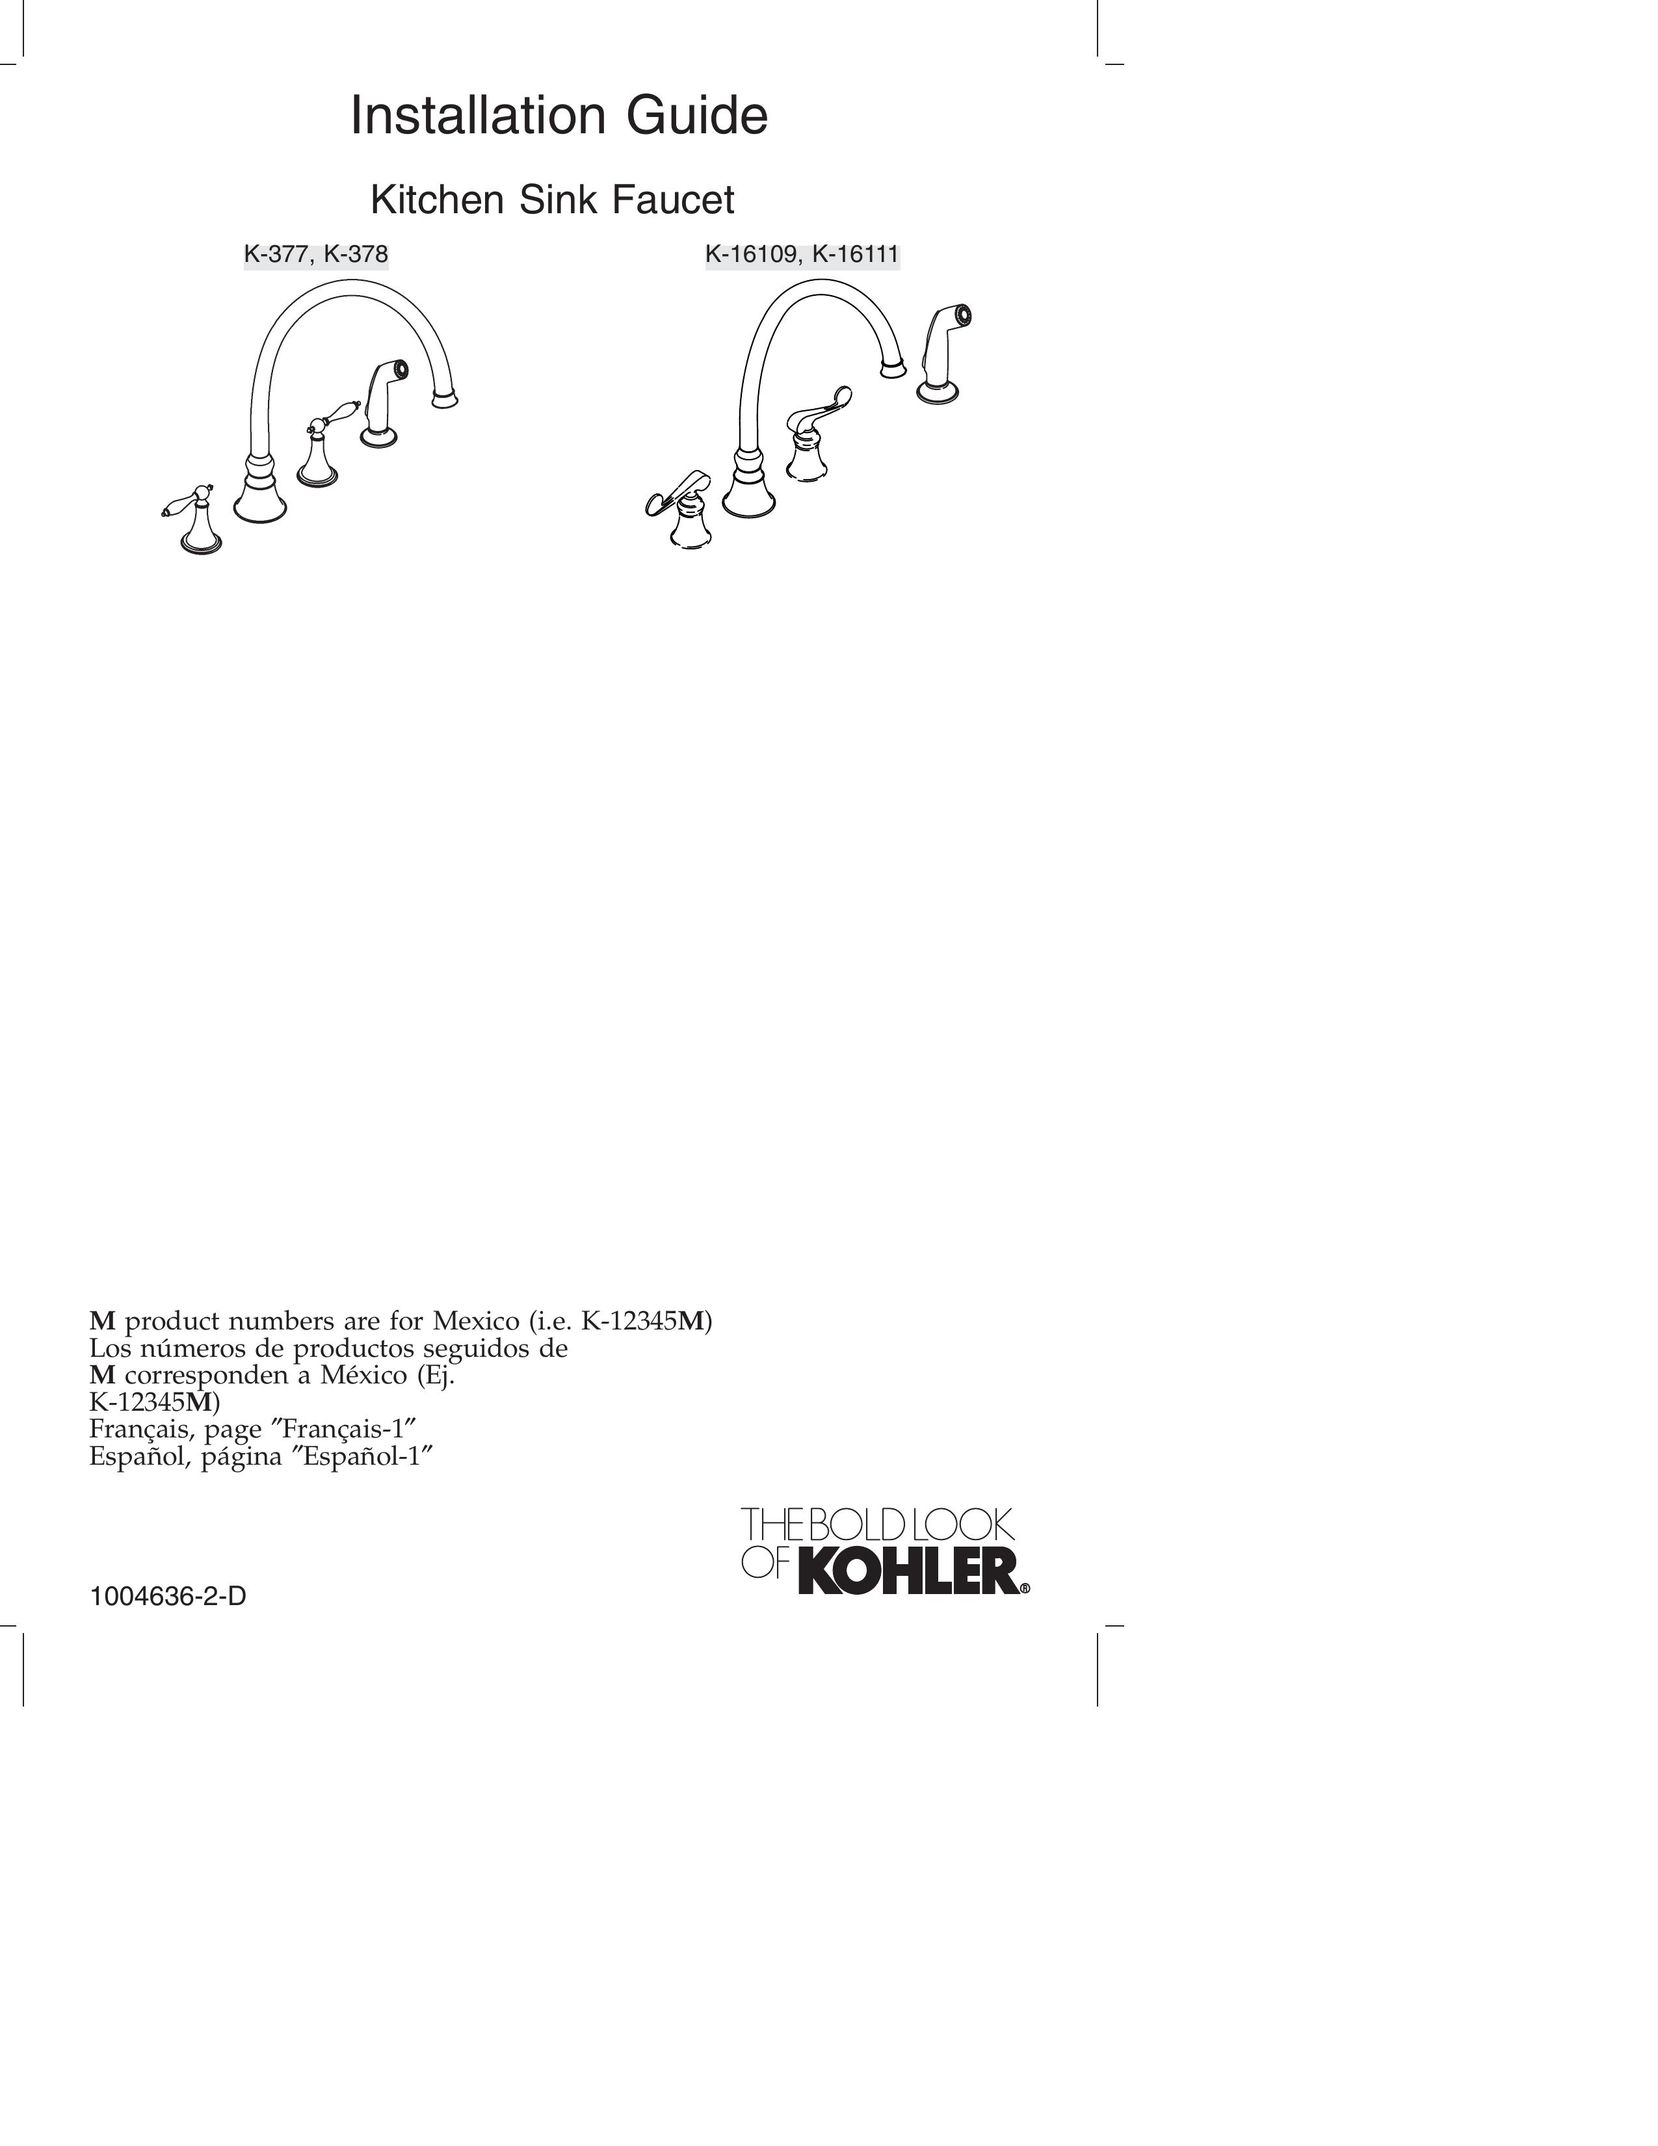 Kohler K-16111 Plumbing Product User Manual